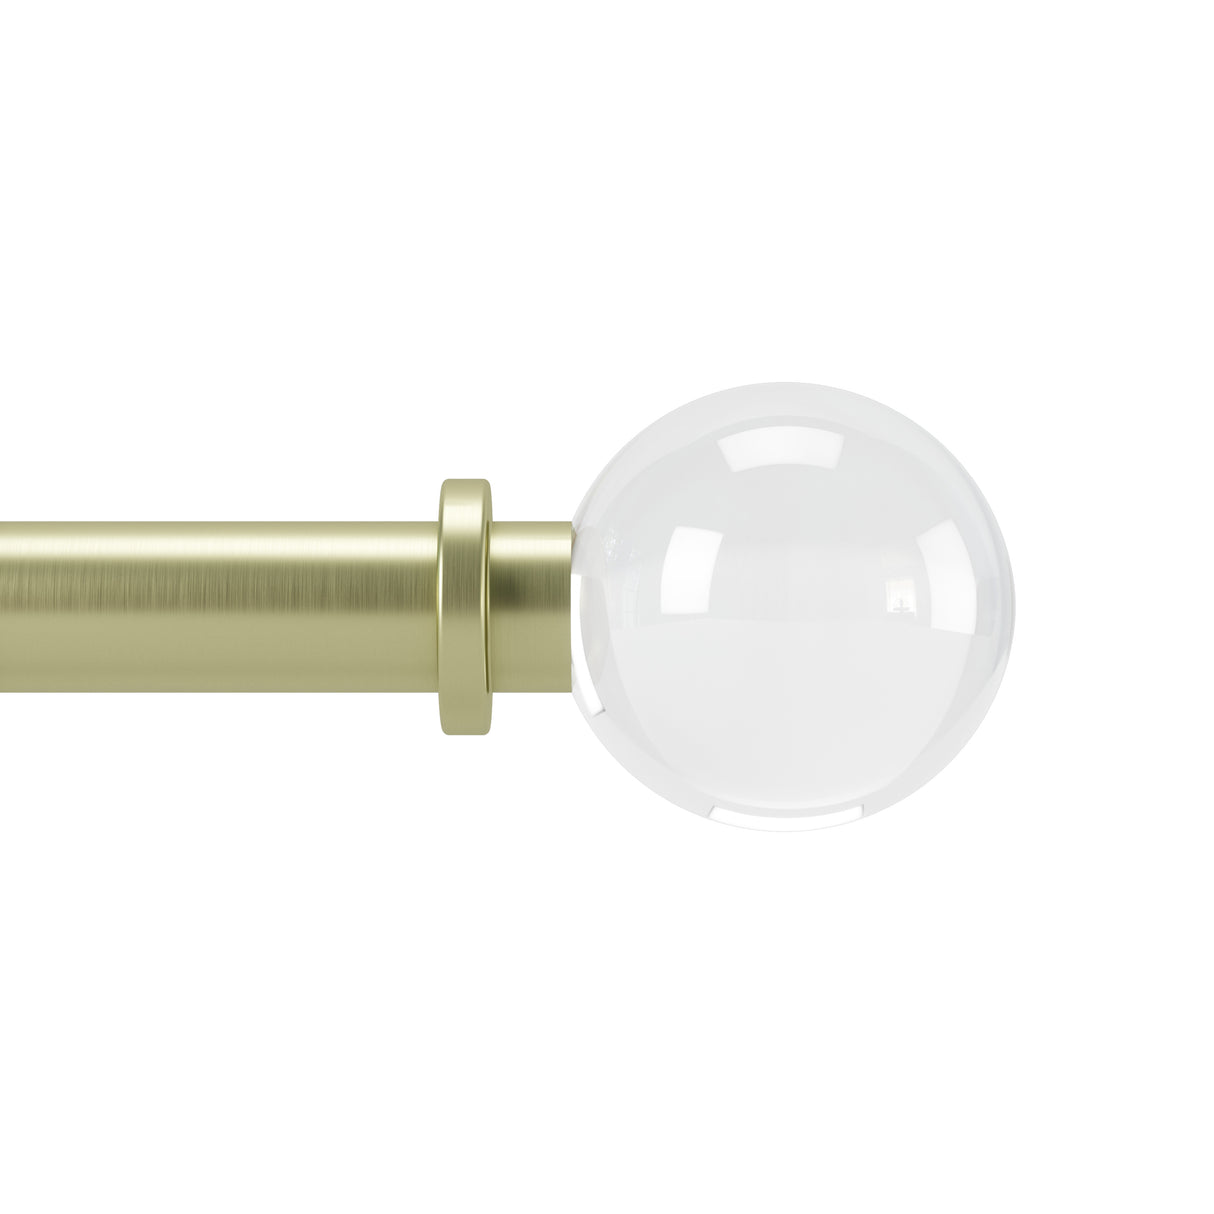 Single Curtain Rods | color: Brass | size: 72-144" (183-366 cm) | diameter: 1" (2.5 cm)